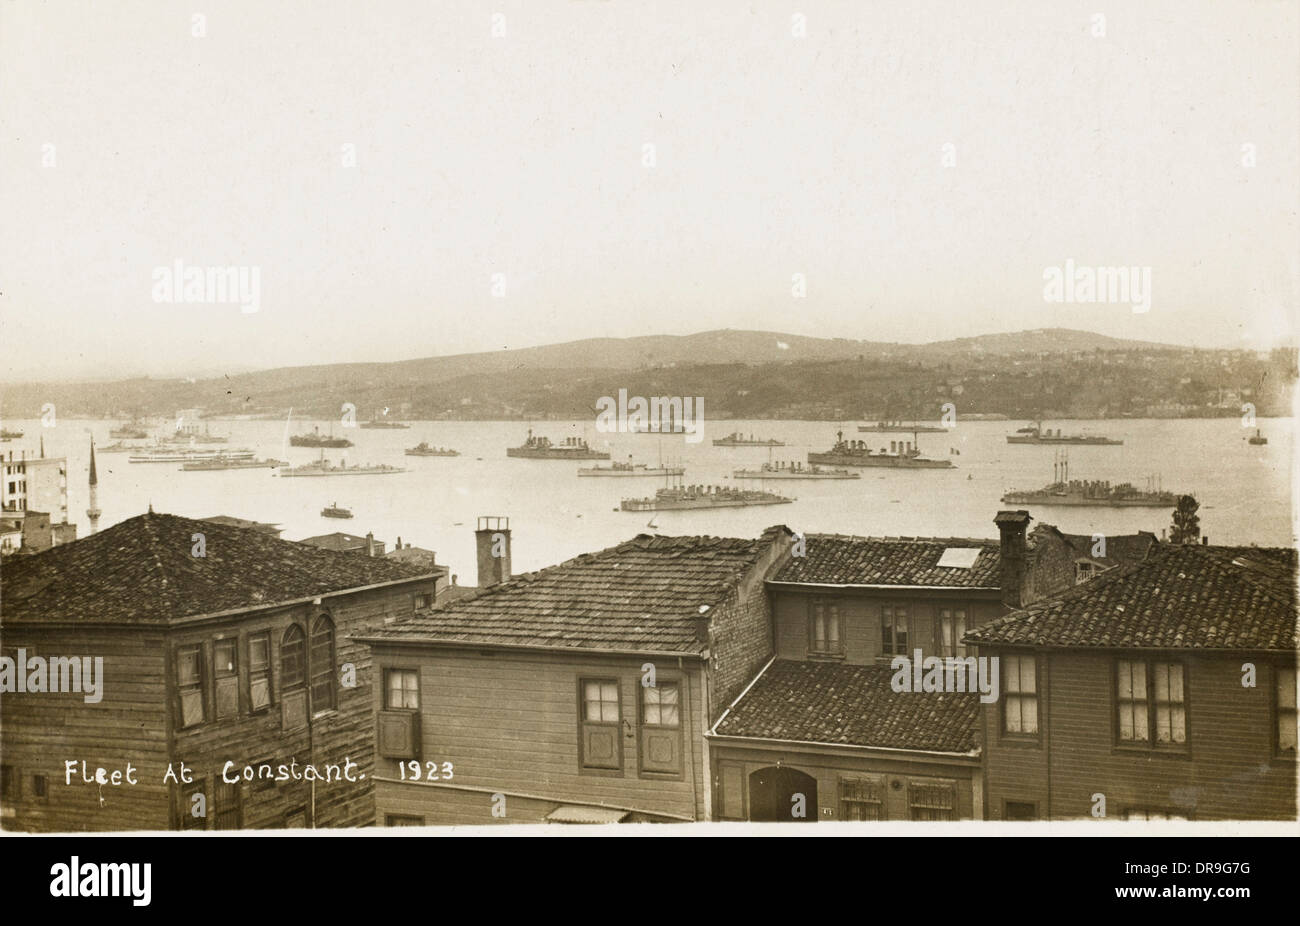 Allied Fleet at Constantinople Stock Photo